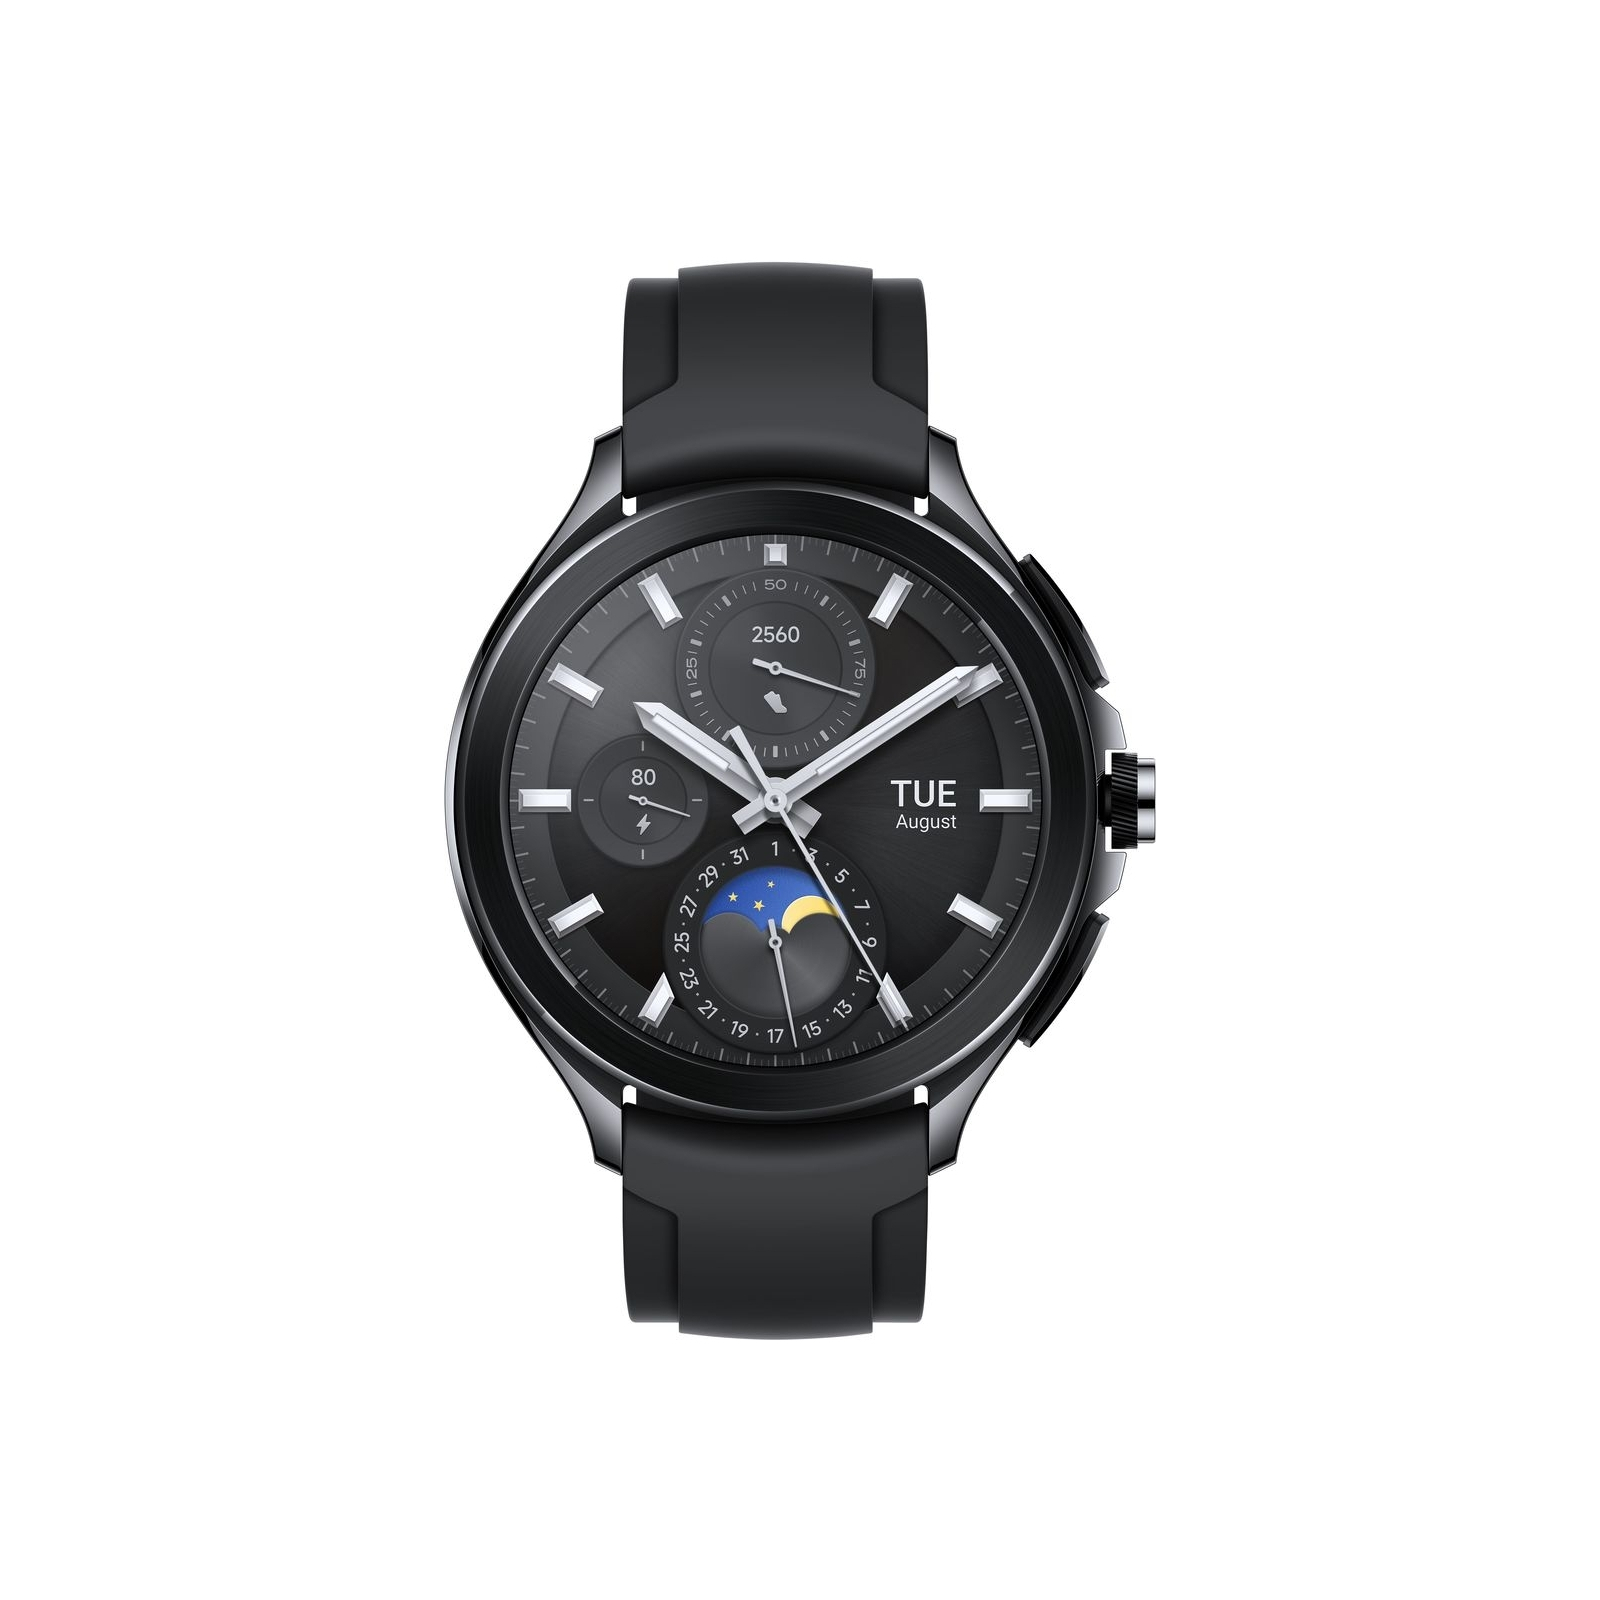 Смарт-часы Xiaomi Watch 2 Pro Bluetooth Black Case with Black Fluororubber Str (1006732) изображение 2